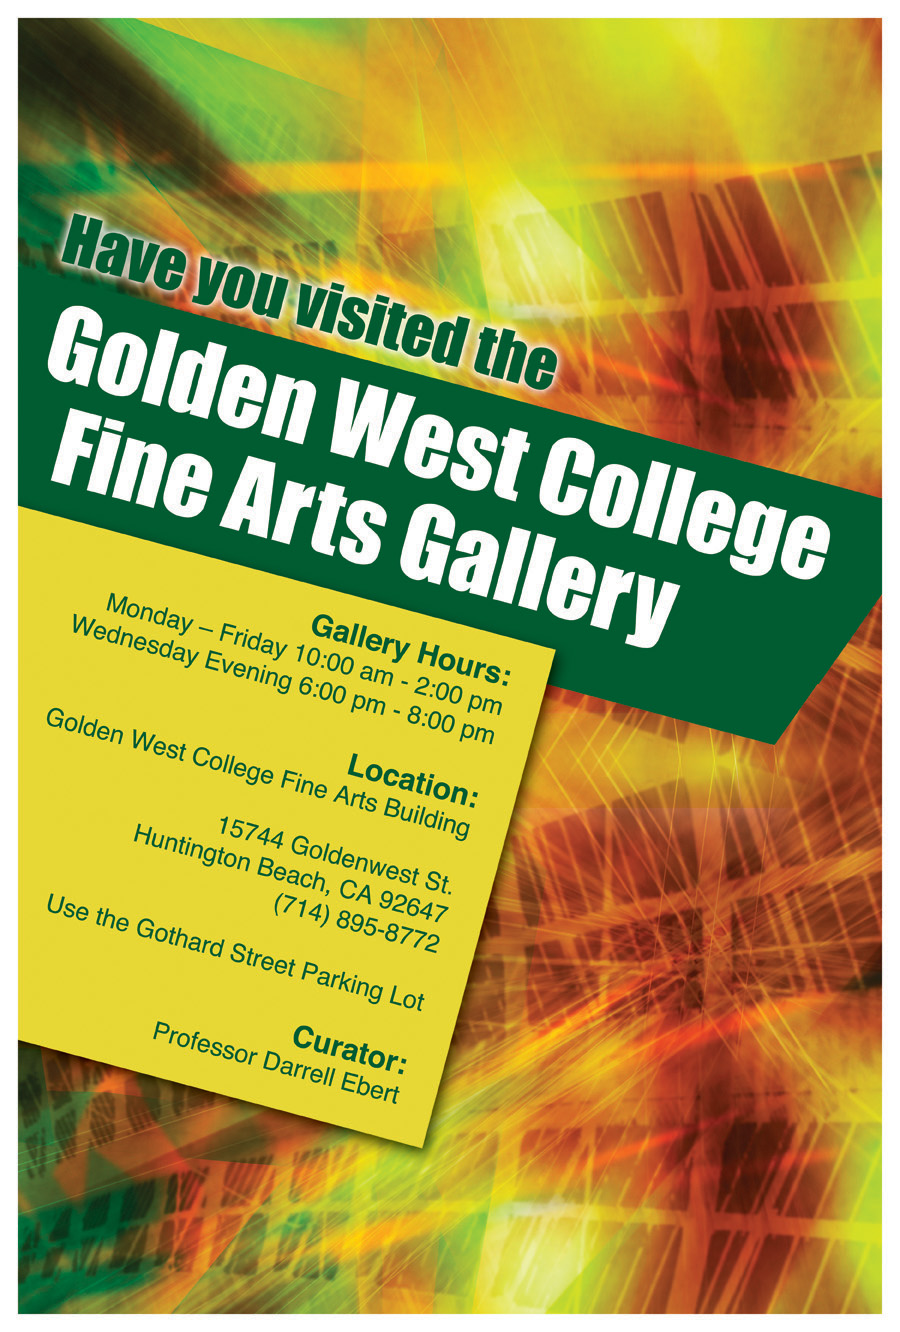 gwc fine arts gallery poster